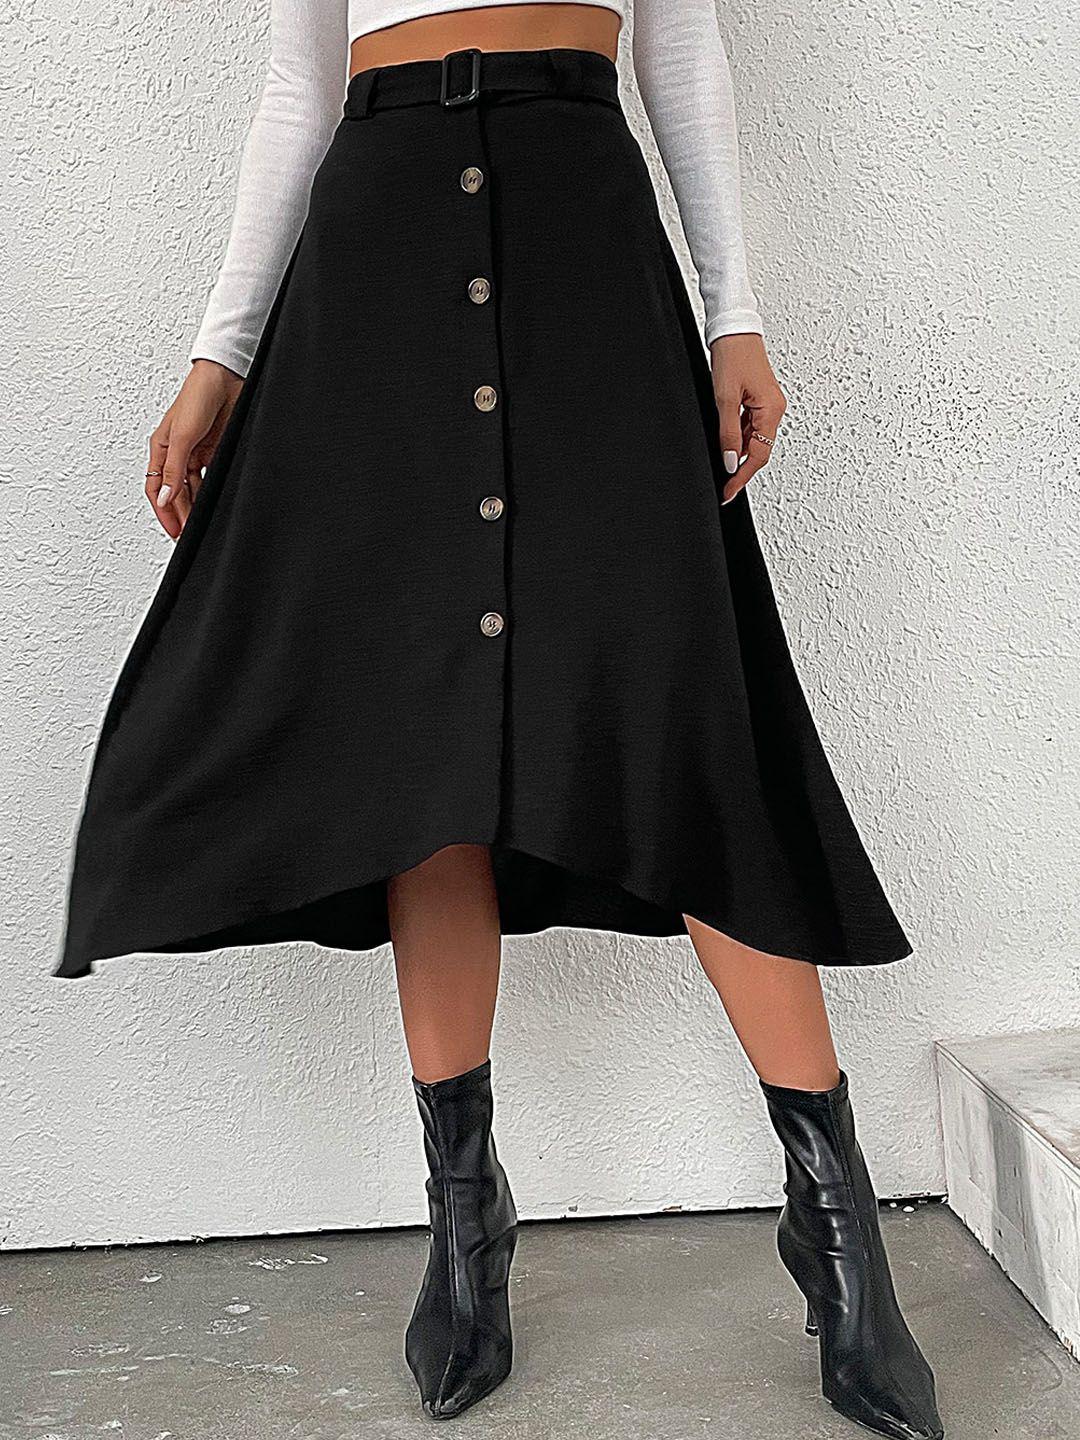 stylecast black maxi length a-line skirt